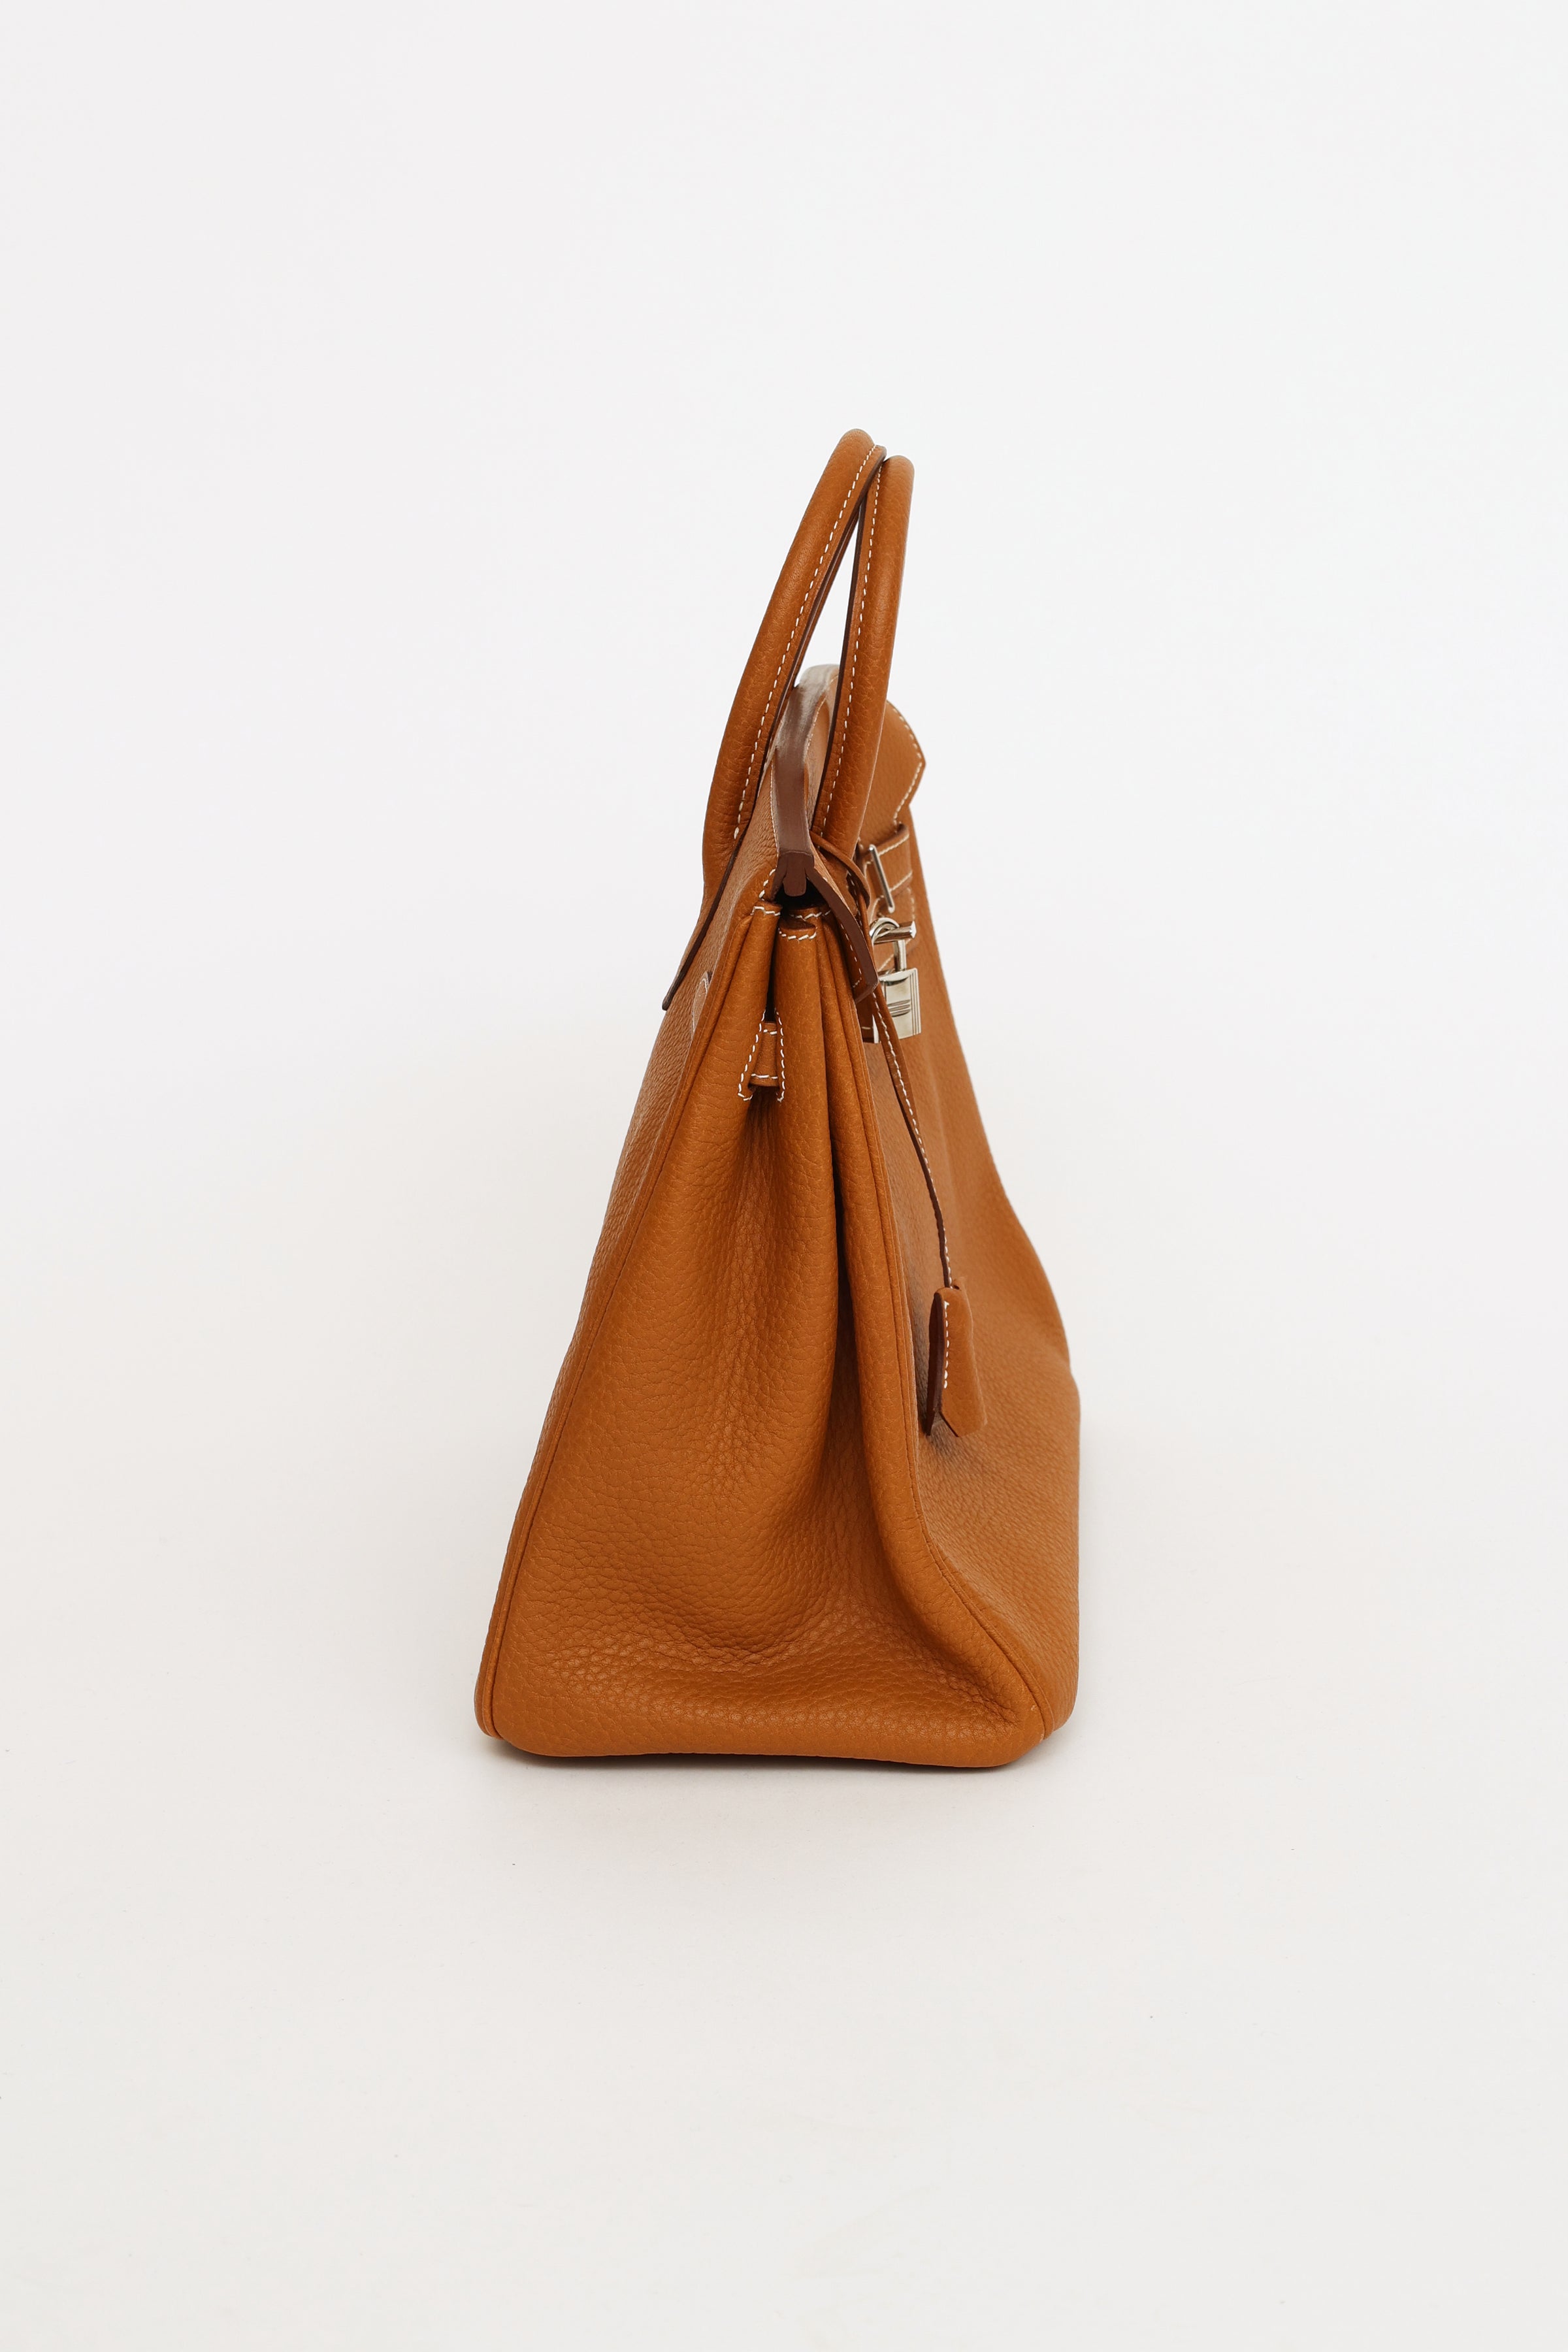 Hermès Haut à Courroies Handbag in Cognac Pecari Leather